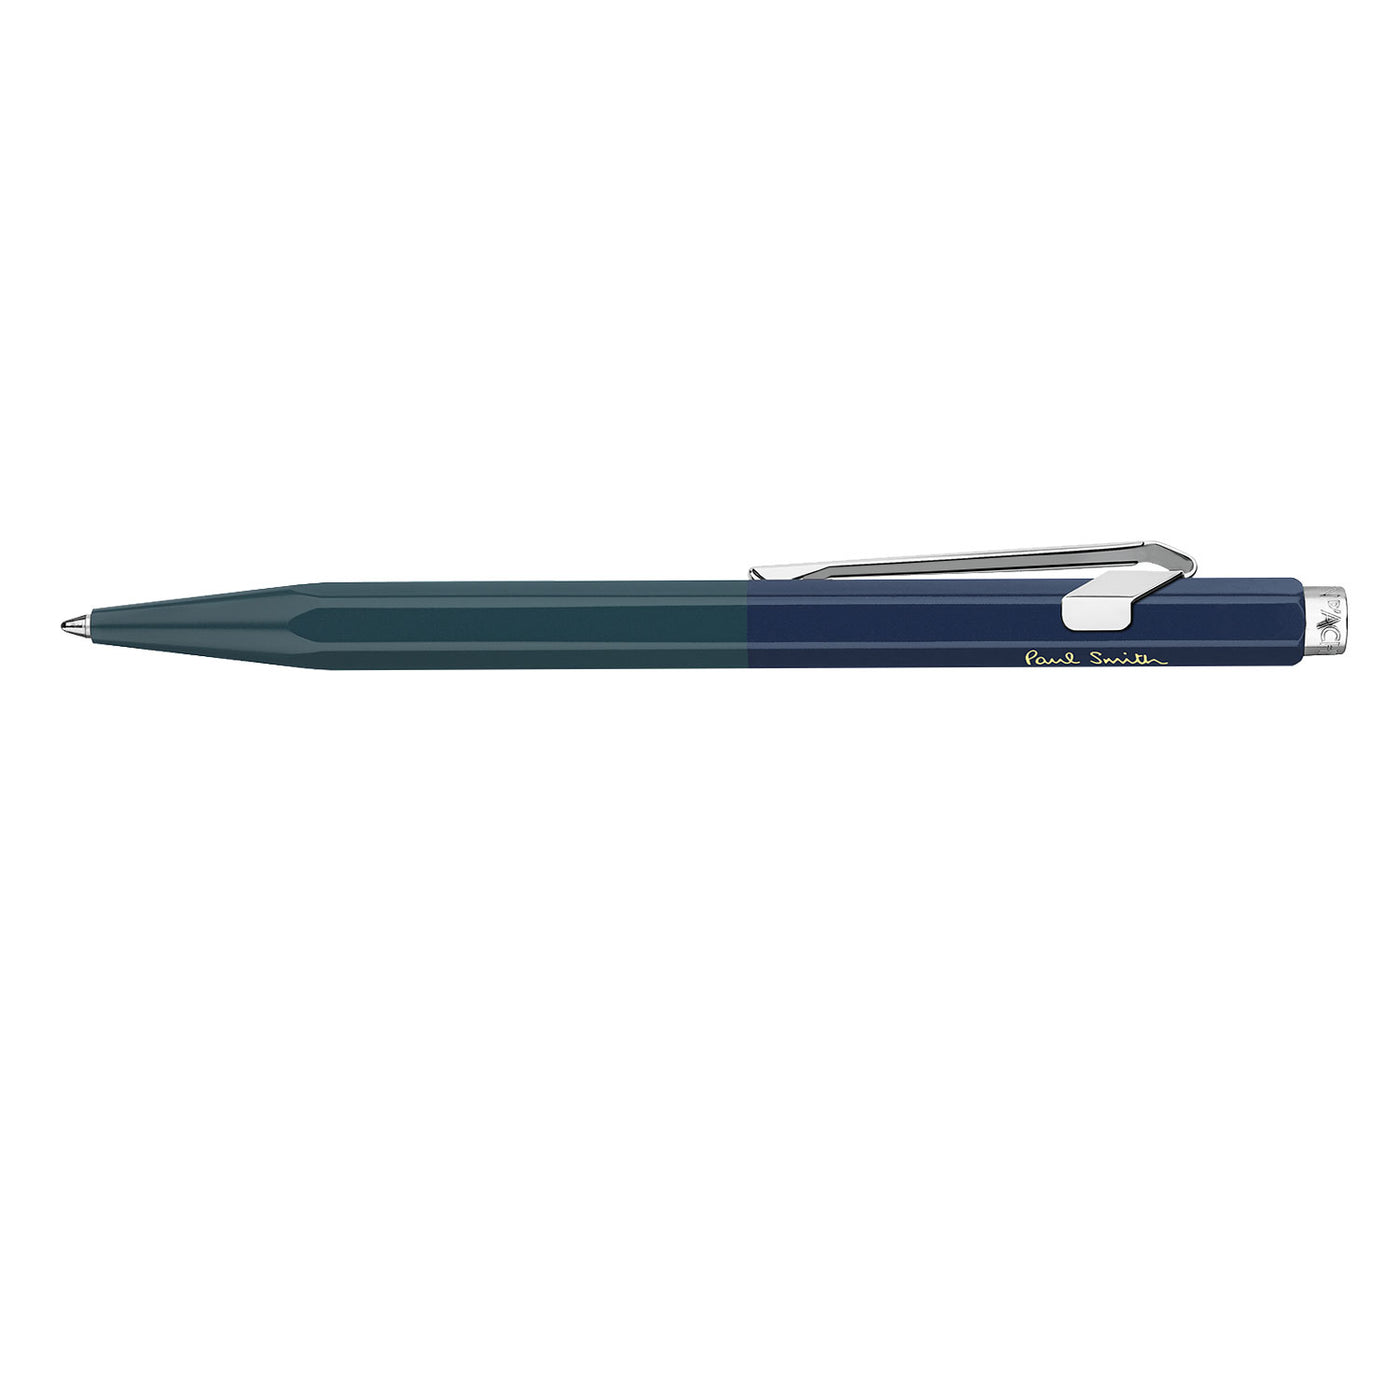 Caran d'Ache 849 Paul Smith Ball Pen - Racing Green & Navy Blue (Limited Edition) 3